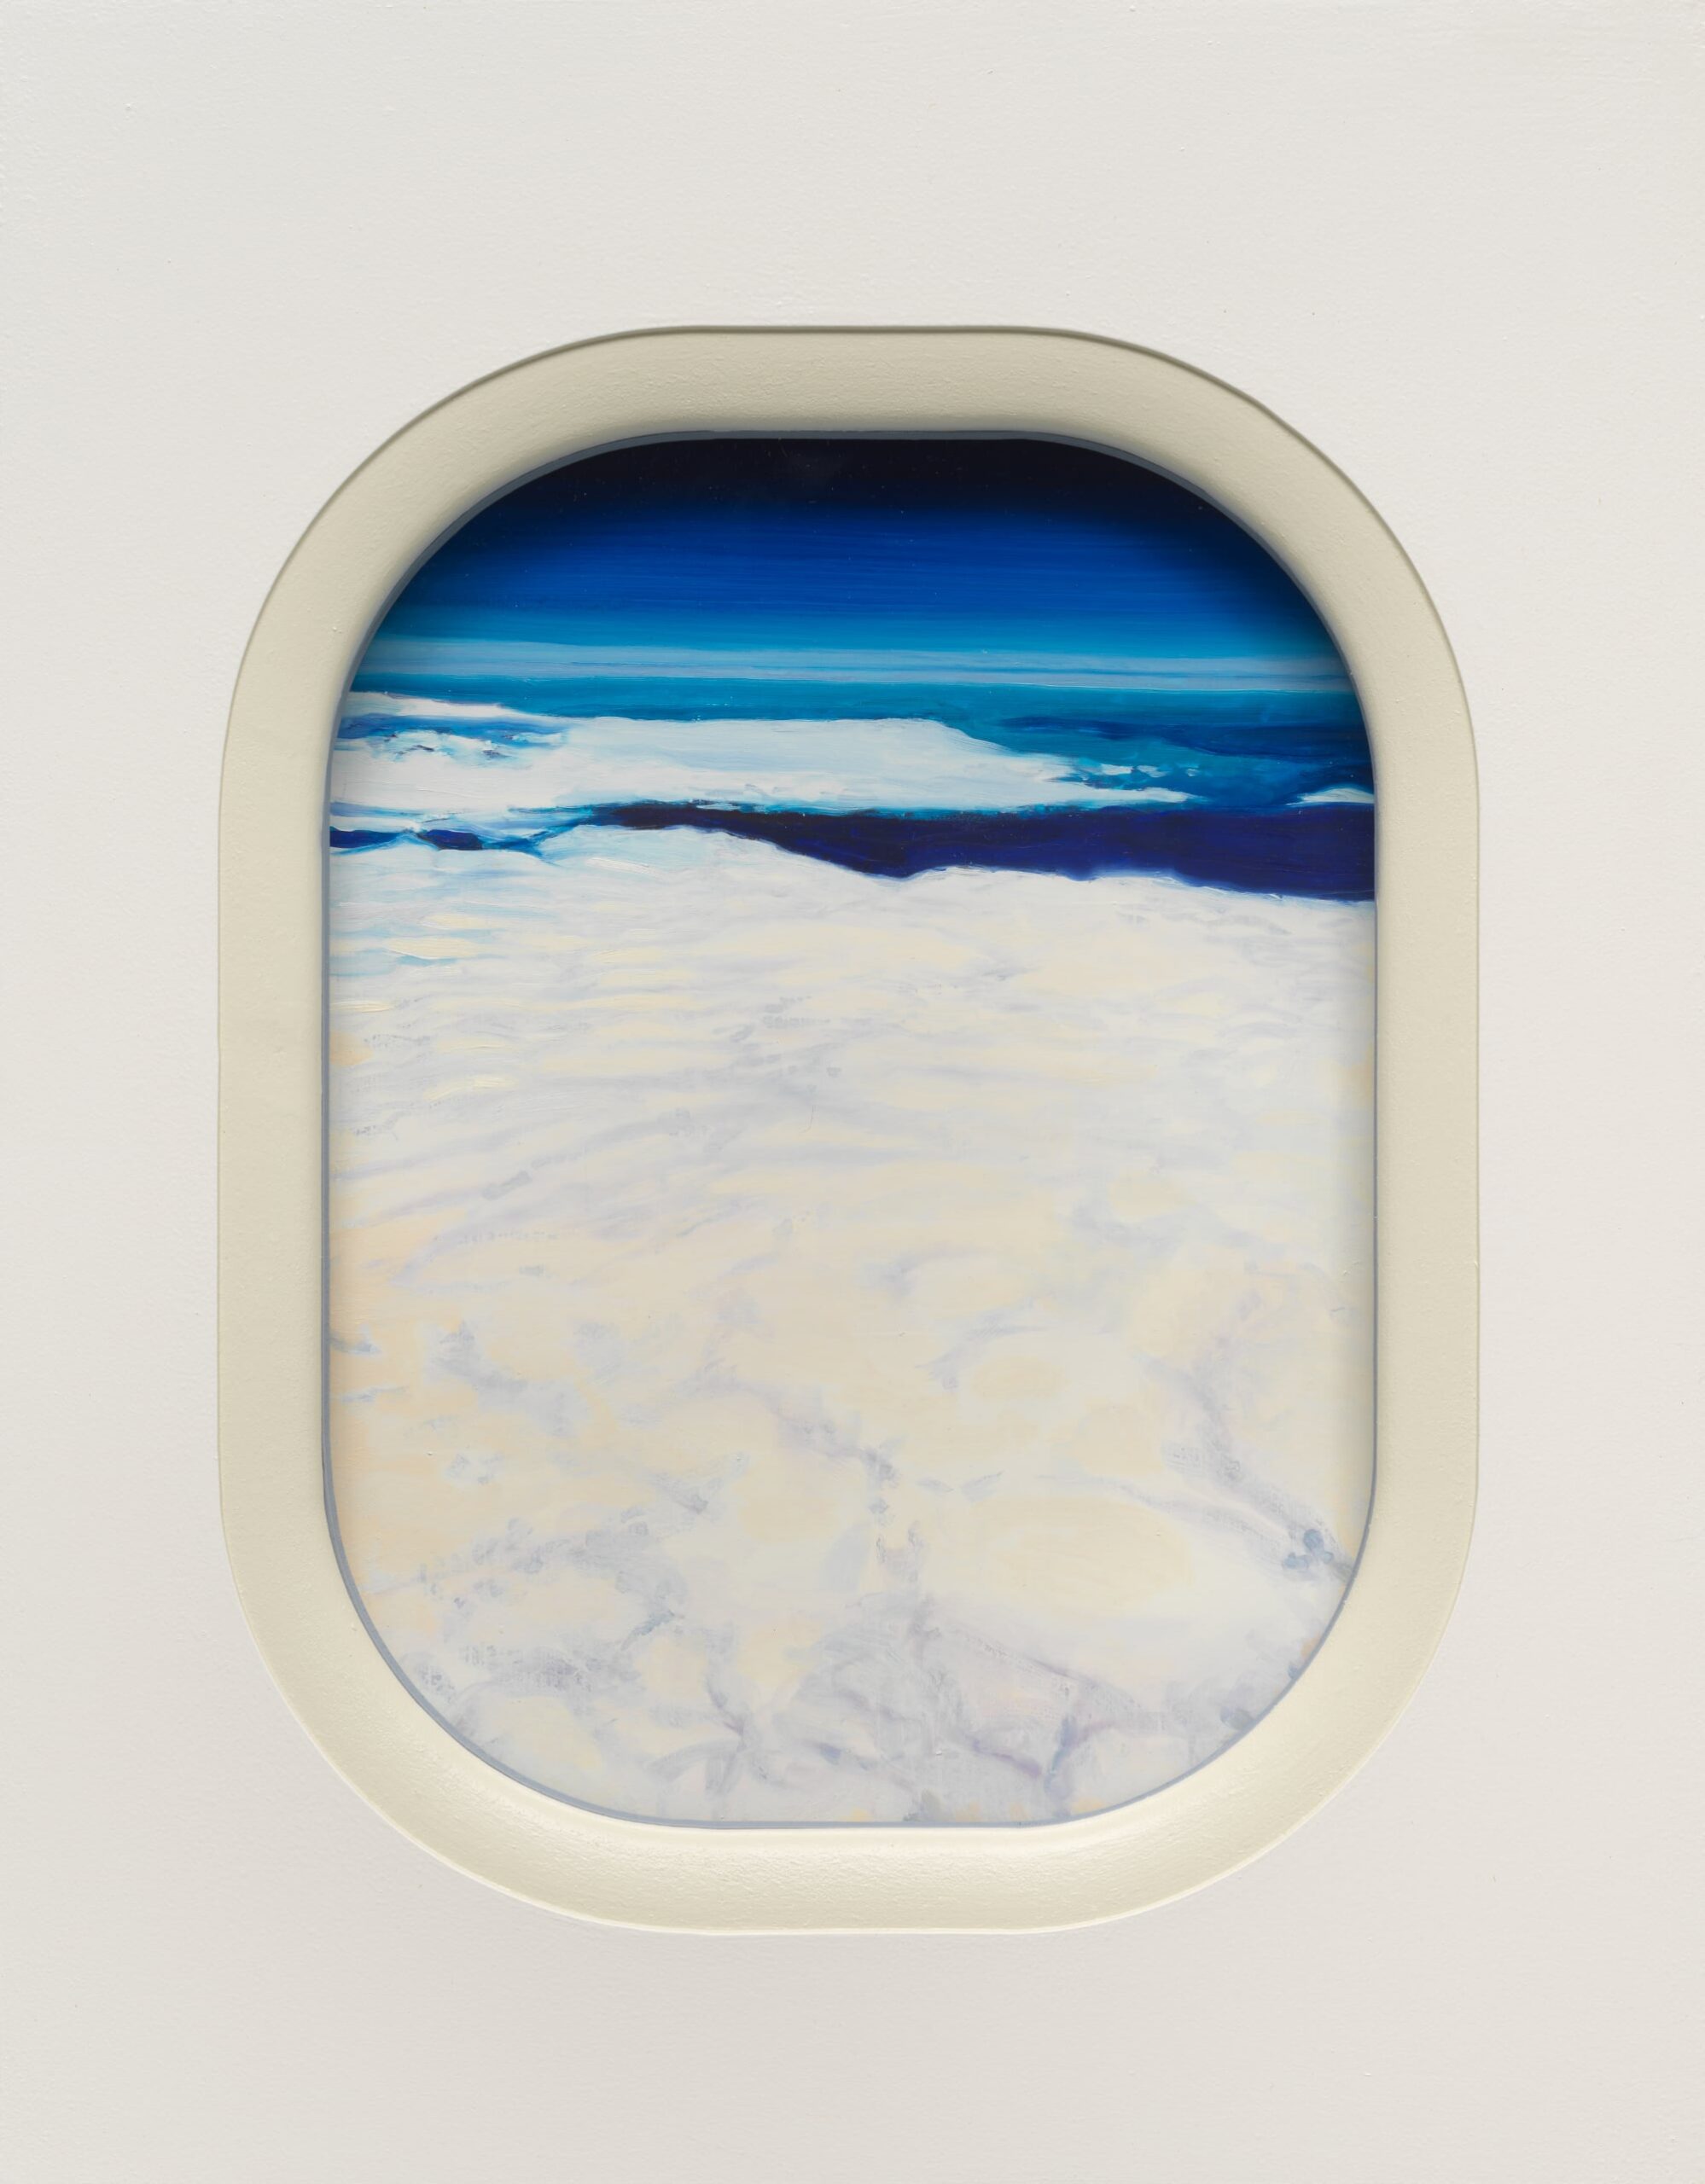 a cloud painting through an airplane-like window